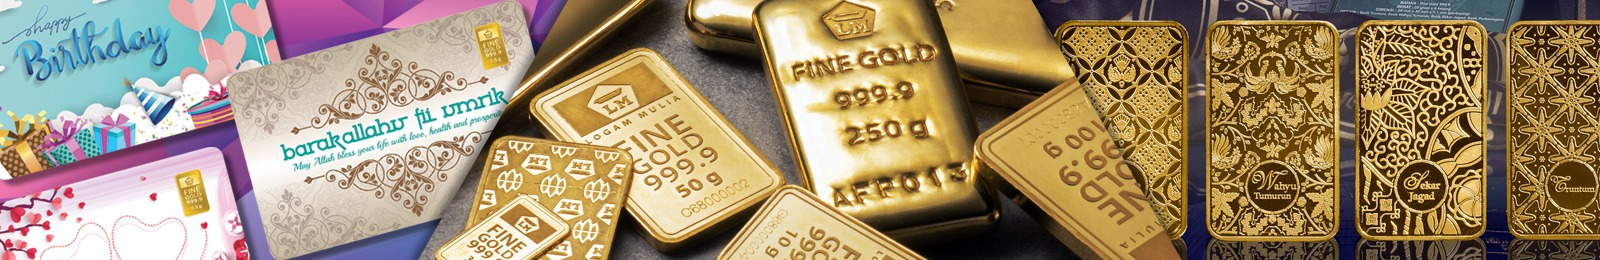 Harga emas Antam batangan pada perdagangan hari ini Senin, 27 Maret 2023 dilaporkan mengalami penurunan hingga Rp2 ribu per gram. logammulia.com